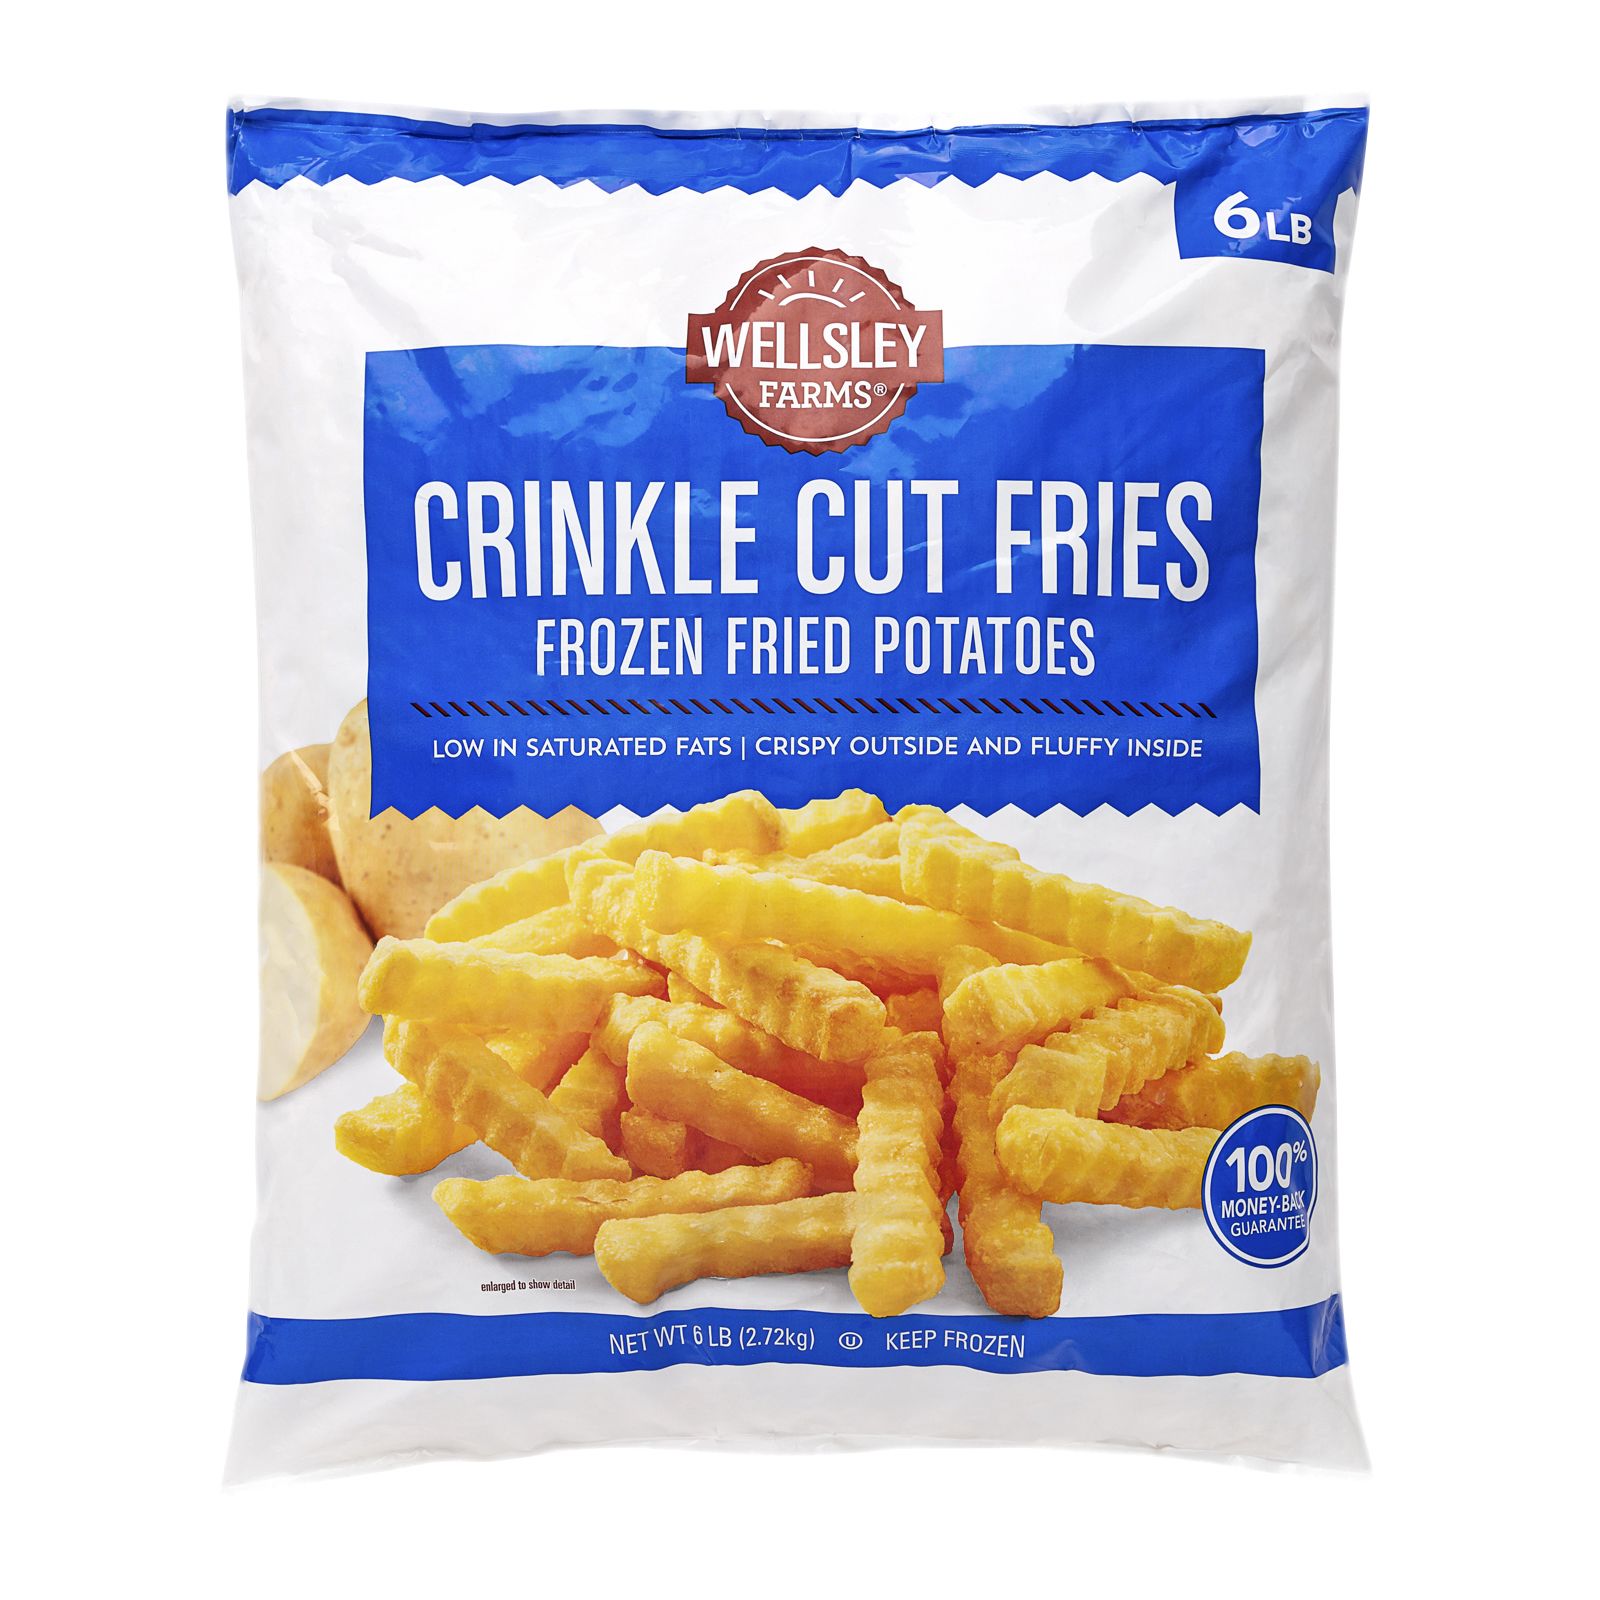 Crinkle Cut French Fried Potatoes - Season's Choice